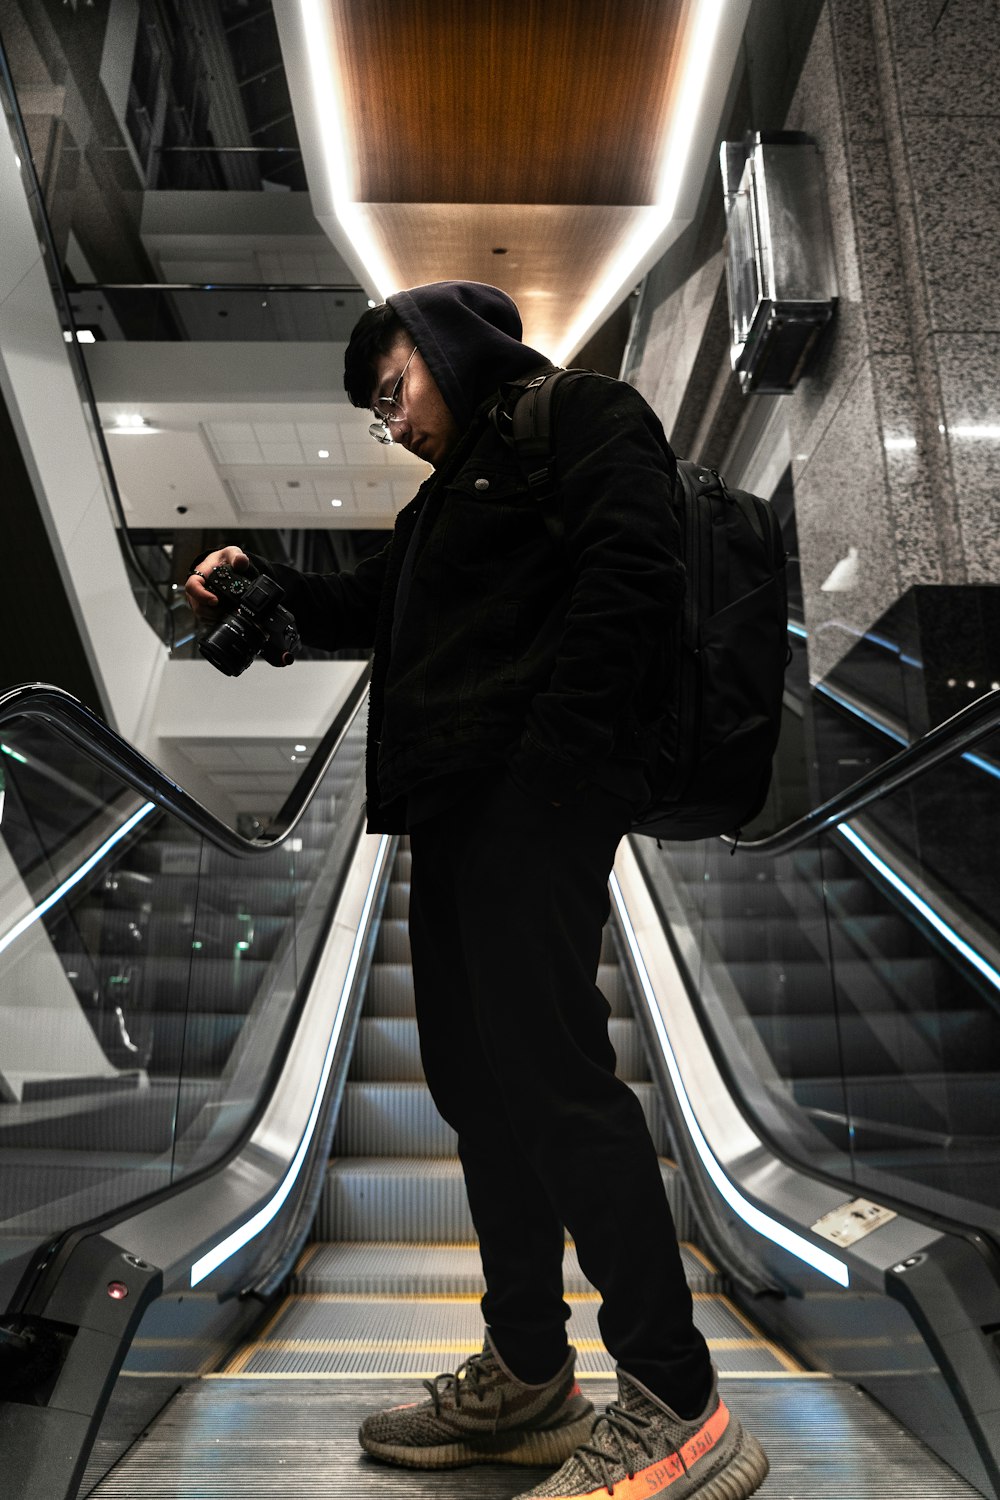 man in black jacket and black cap standing on escalator